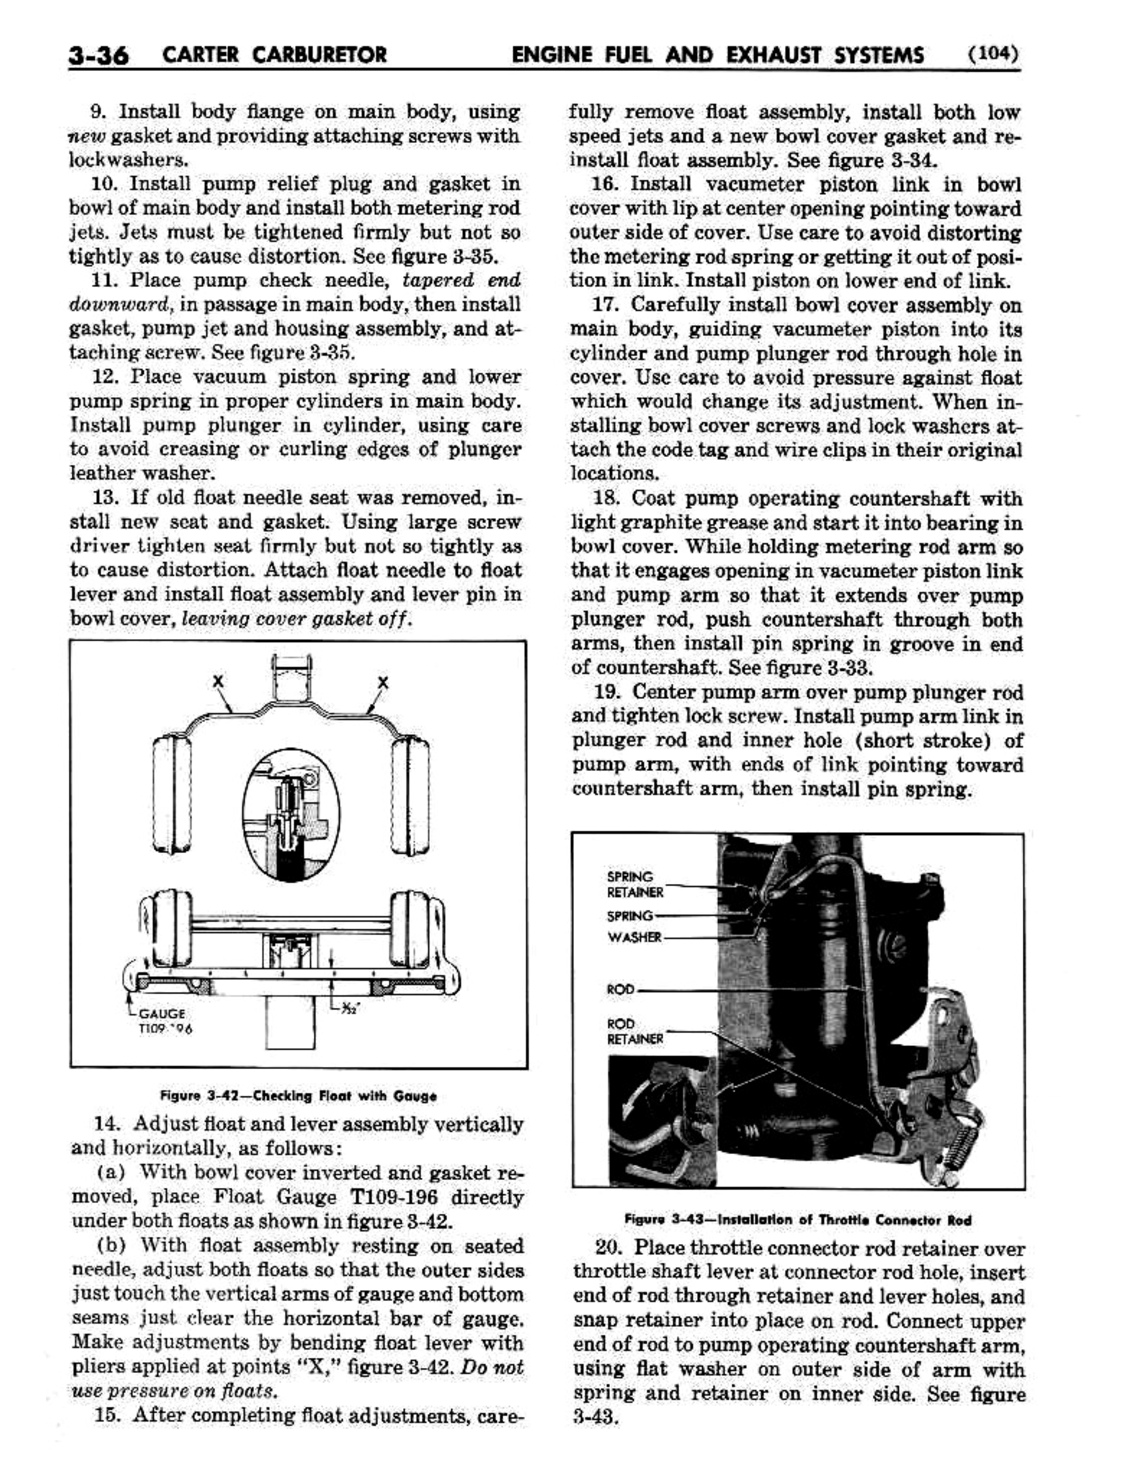 n_04 1951 Buick Shop Manual - Engine Fuel & Exhaust-036-036.jpg